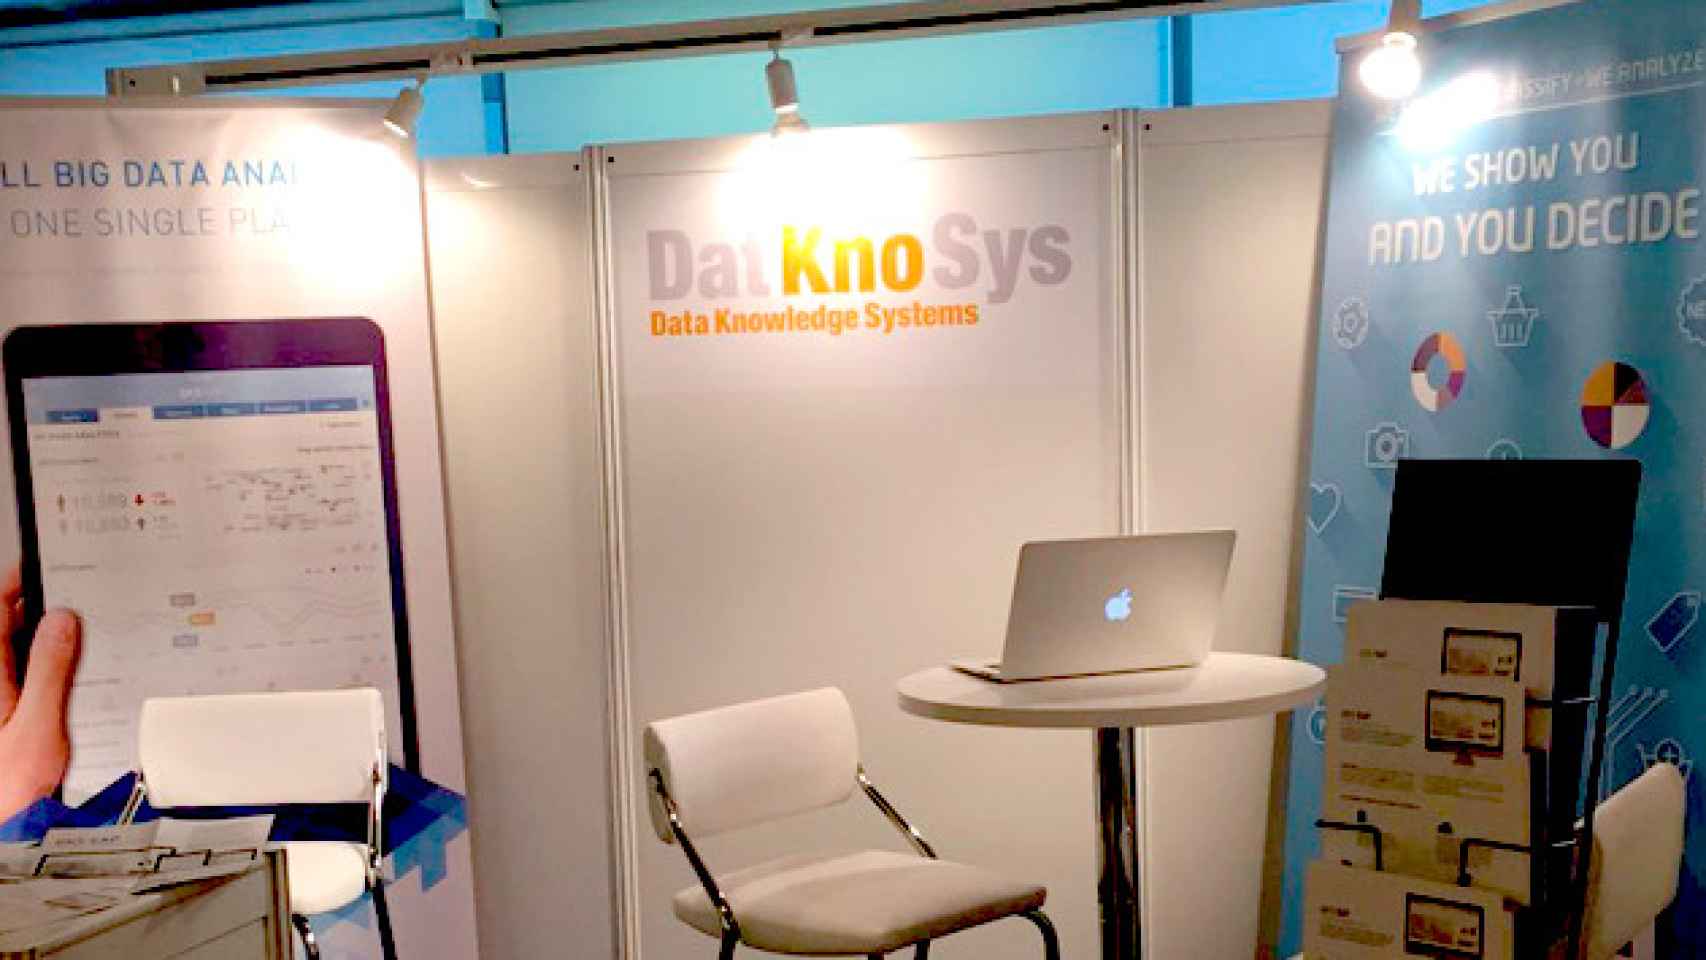 Stand de la empresa Datknosys, compañía que desarrolla soluciones de mercadotecnia digital / CG